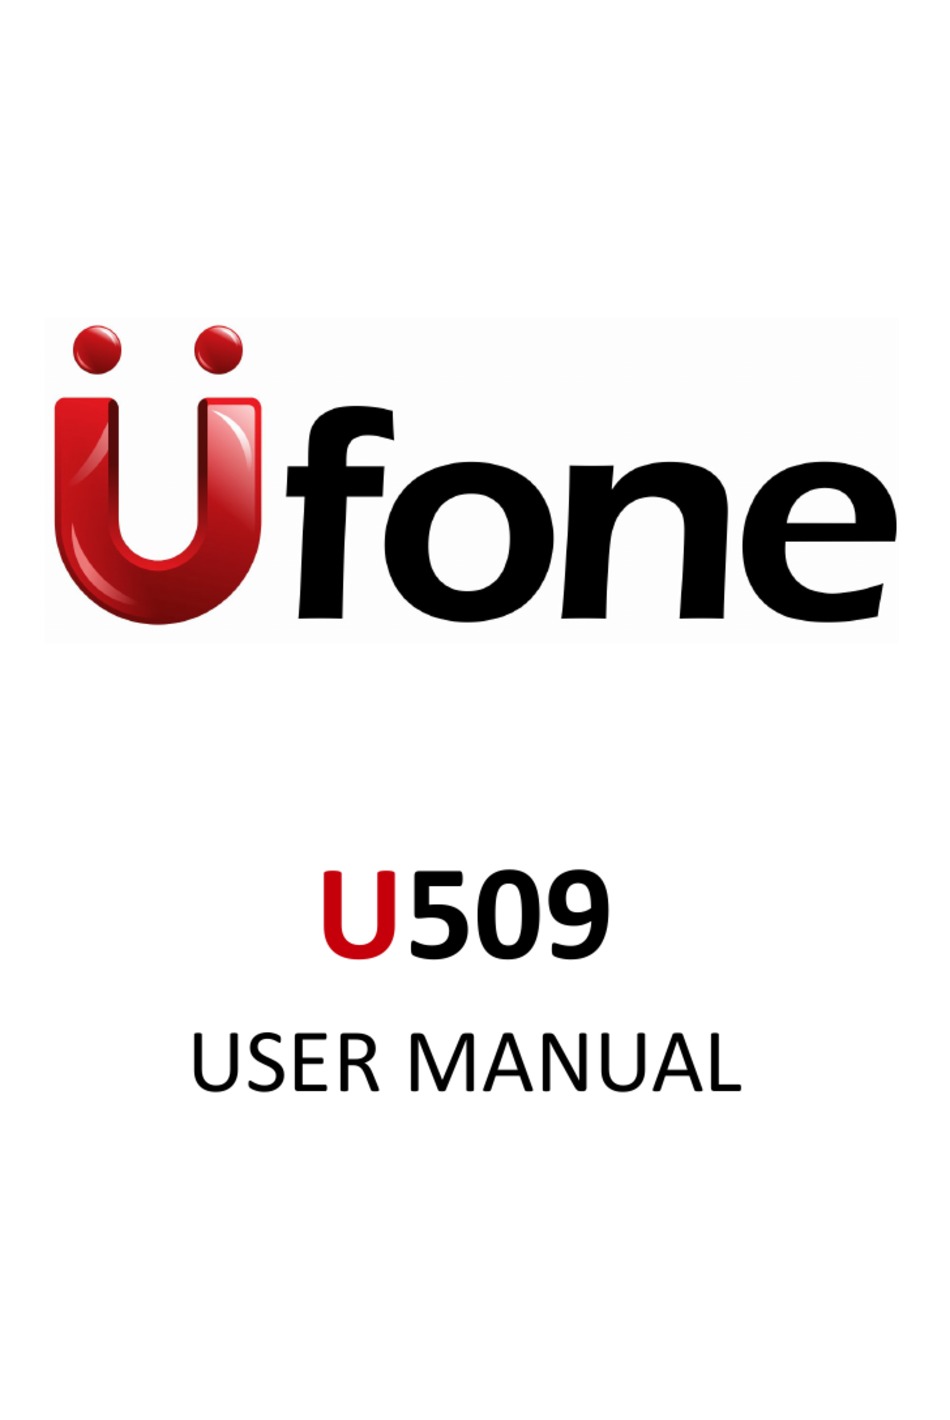 UFONE U509 USER MANUAL Pdf Download